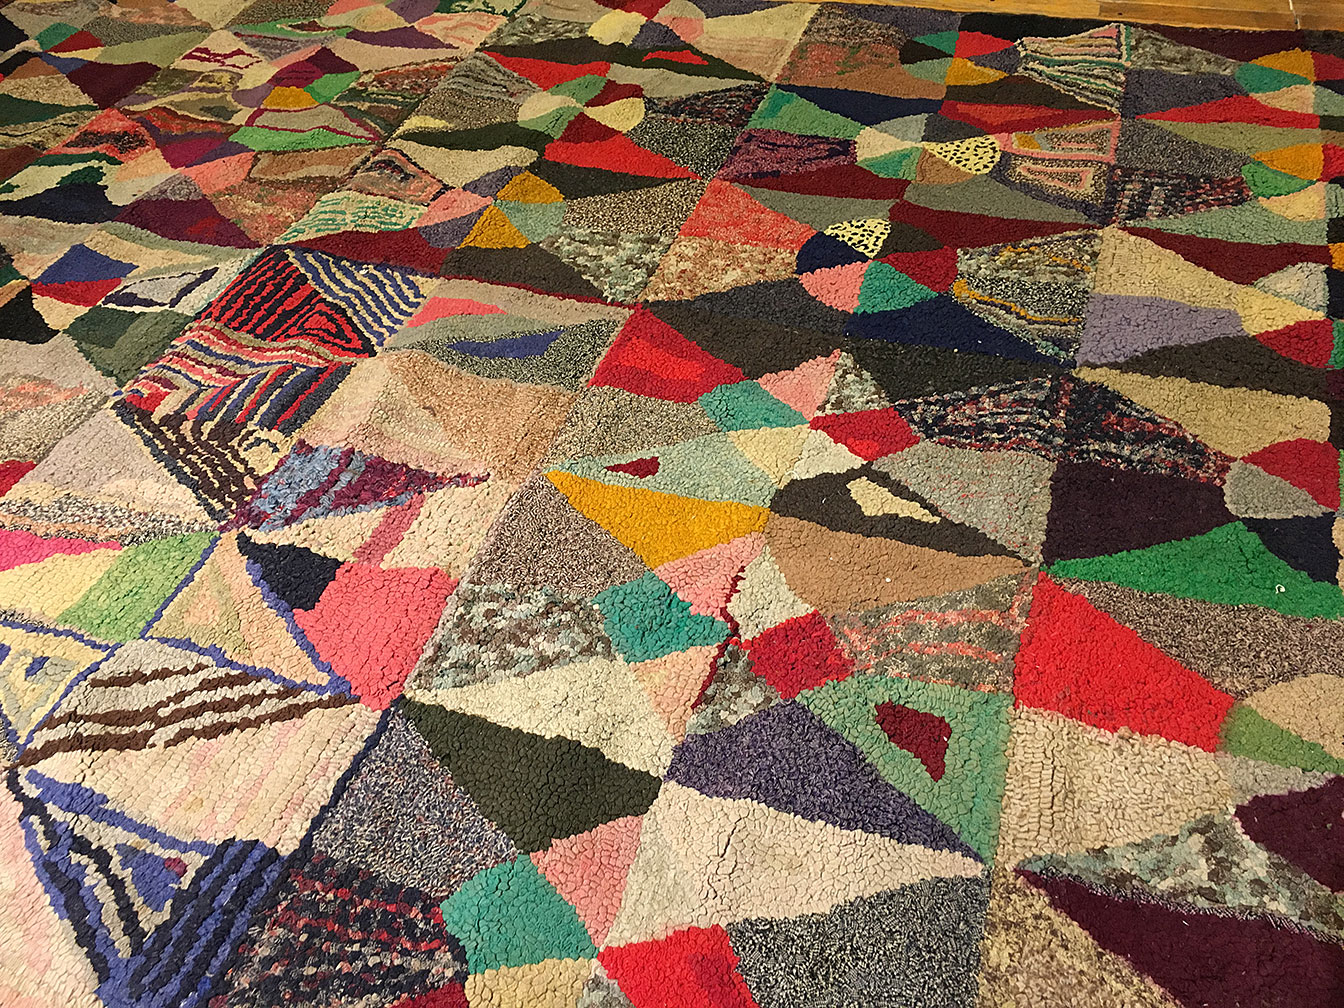 Antique hooked Carpet - # 53102